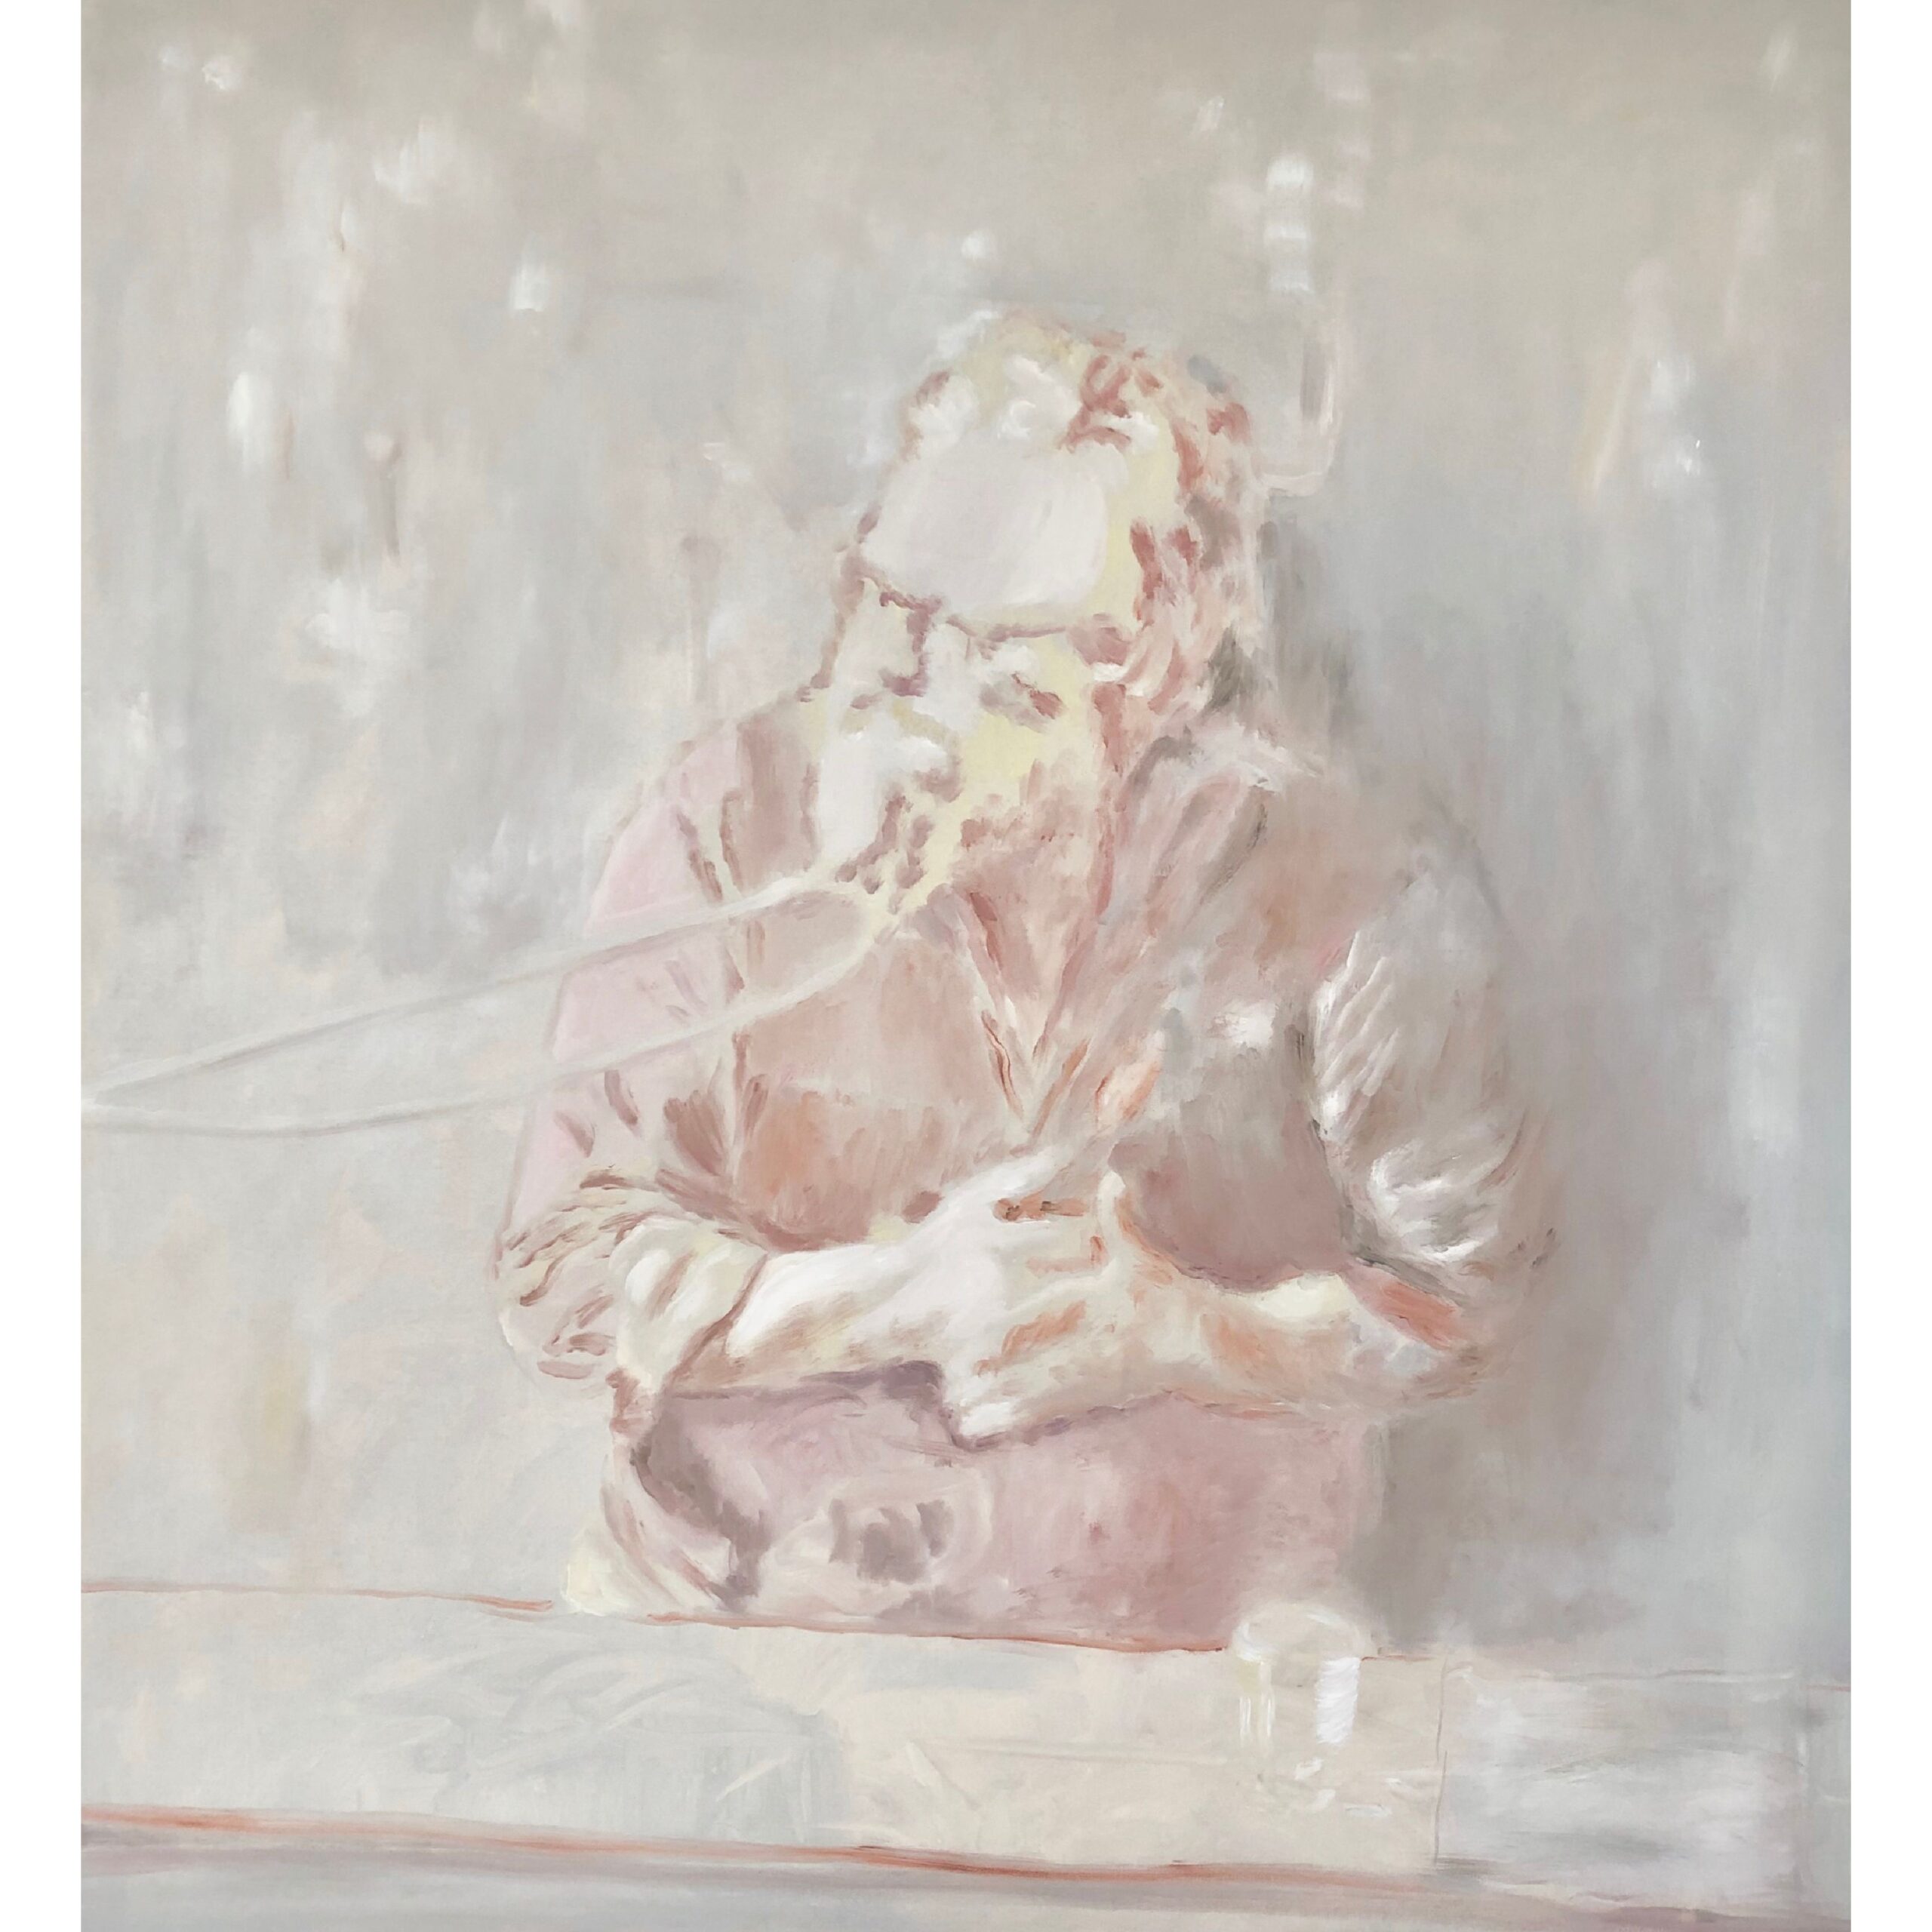 The Musician, 120x110, oil on canvas, Brit Windahl 2020